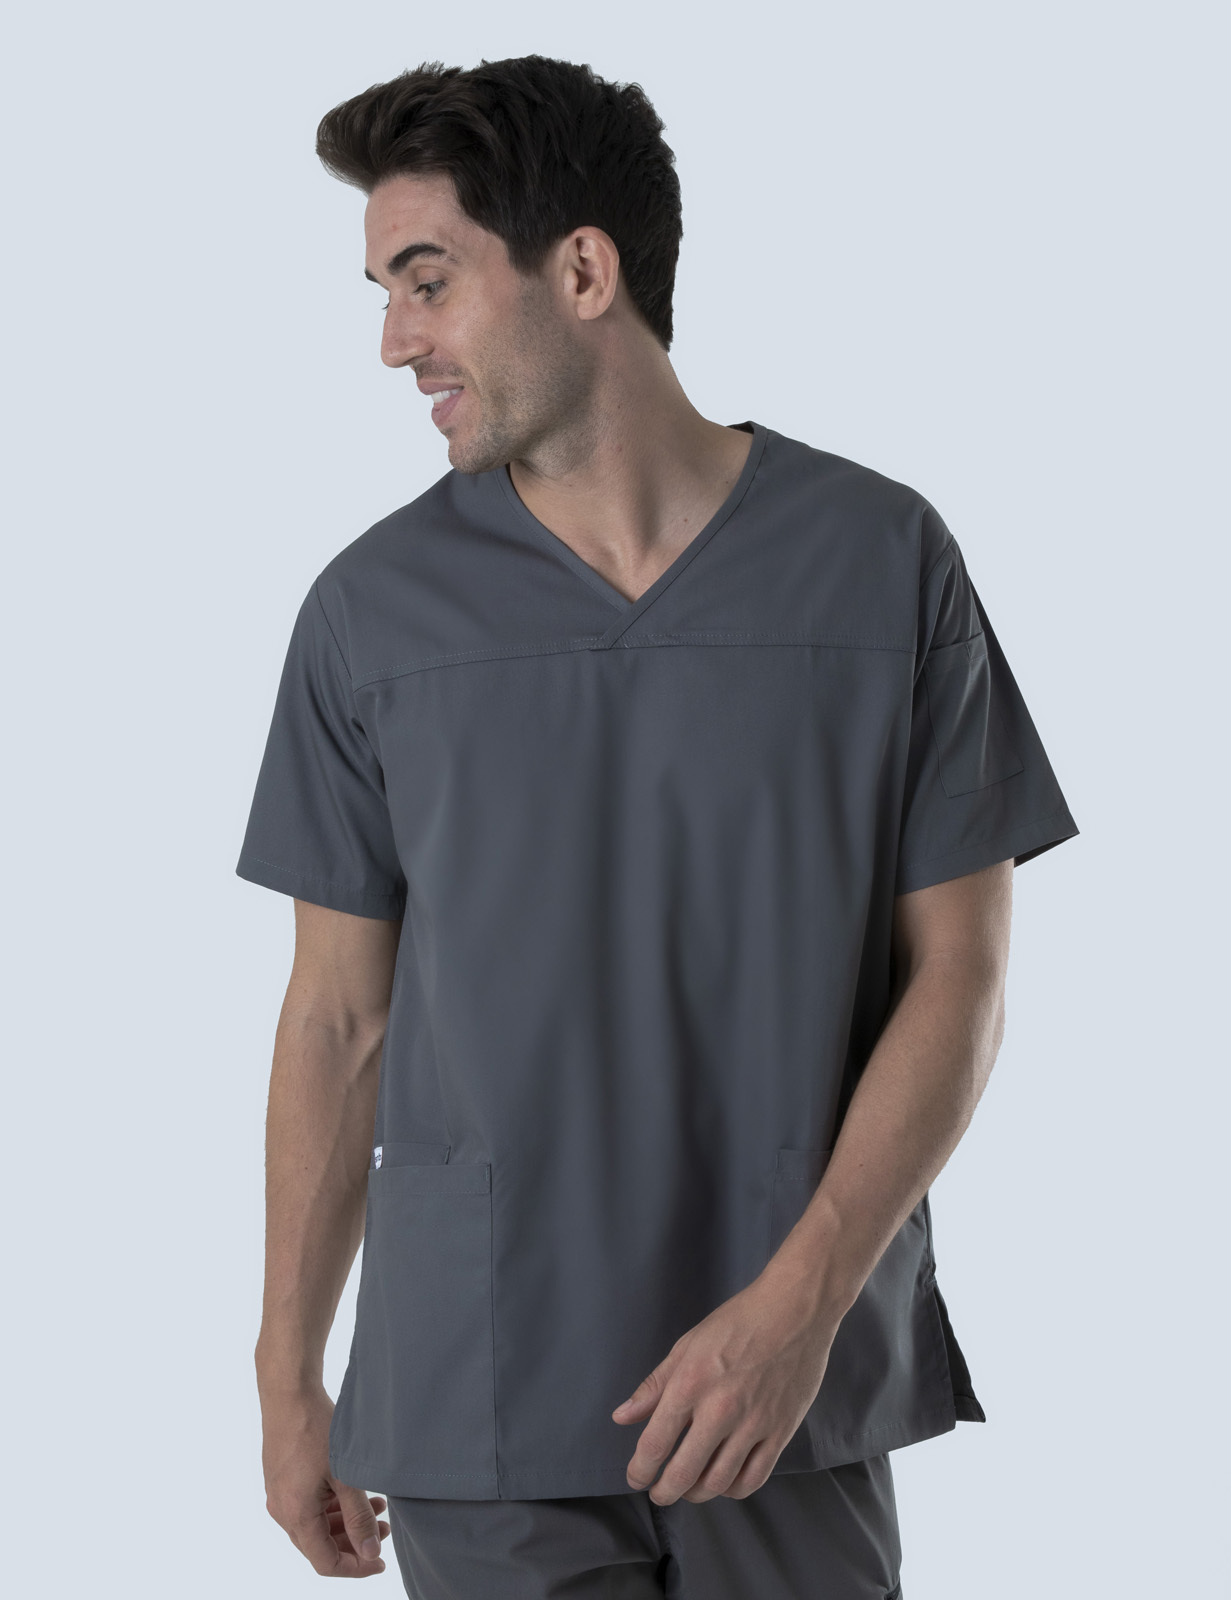 Ipswich Hospital Pharmacy Uniform Top Only Bundle (Men's Fit Solid Top in Steel Grey + 3 Logos)